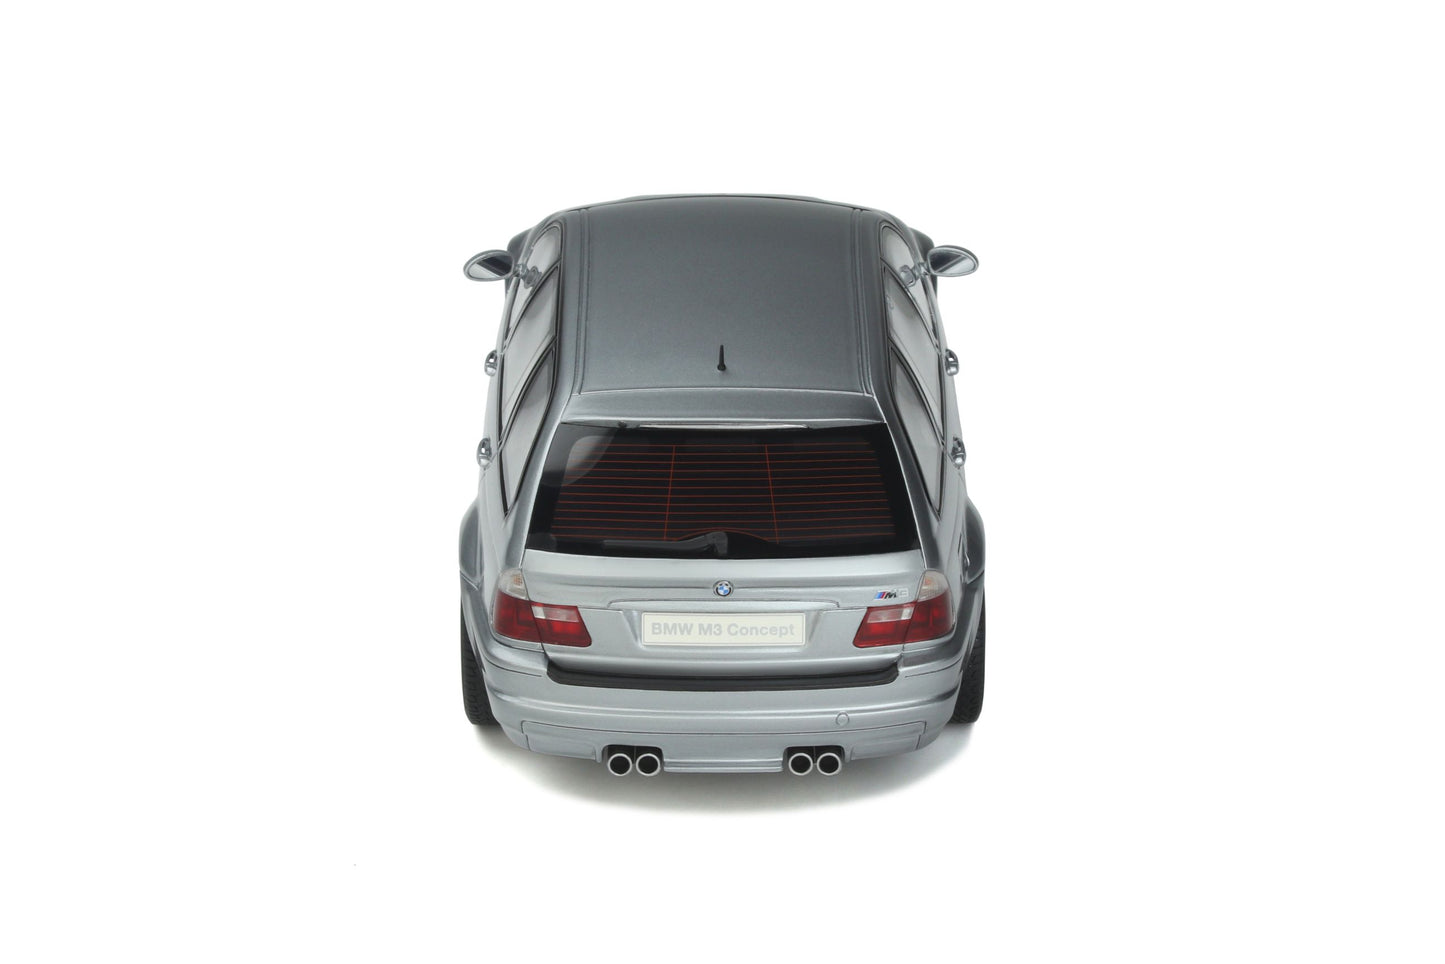 OttOmobile - BMW M3 (E46) "Touring Concept" (Chrome Shadow Metallic) 1:18 Scale Model Car